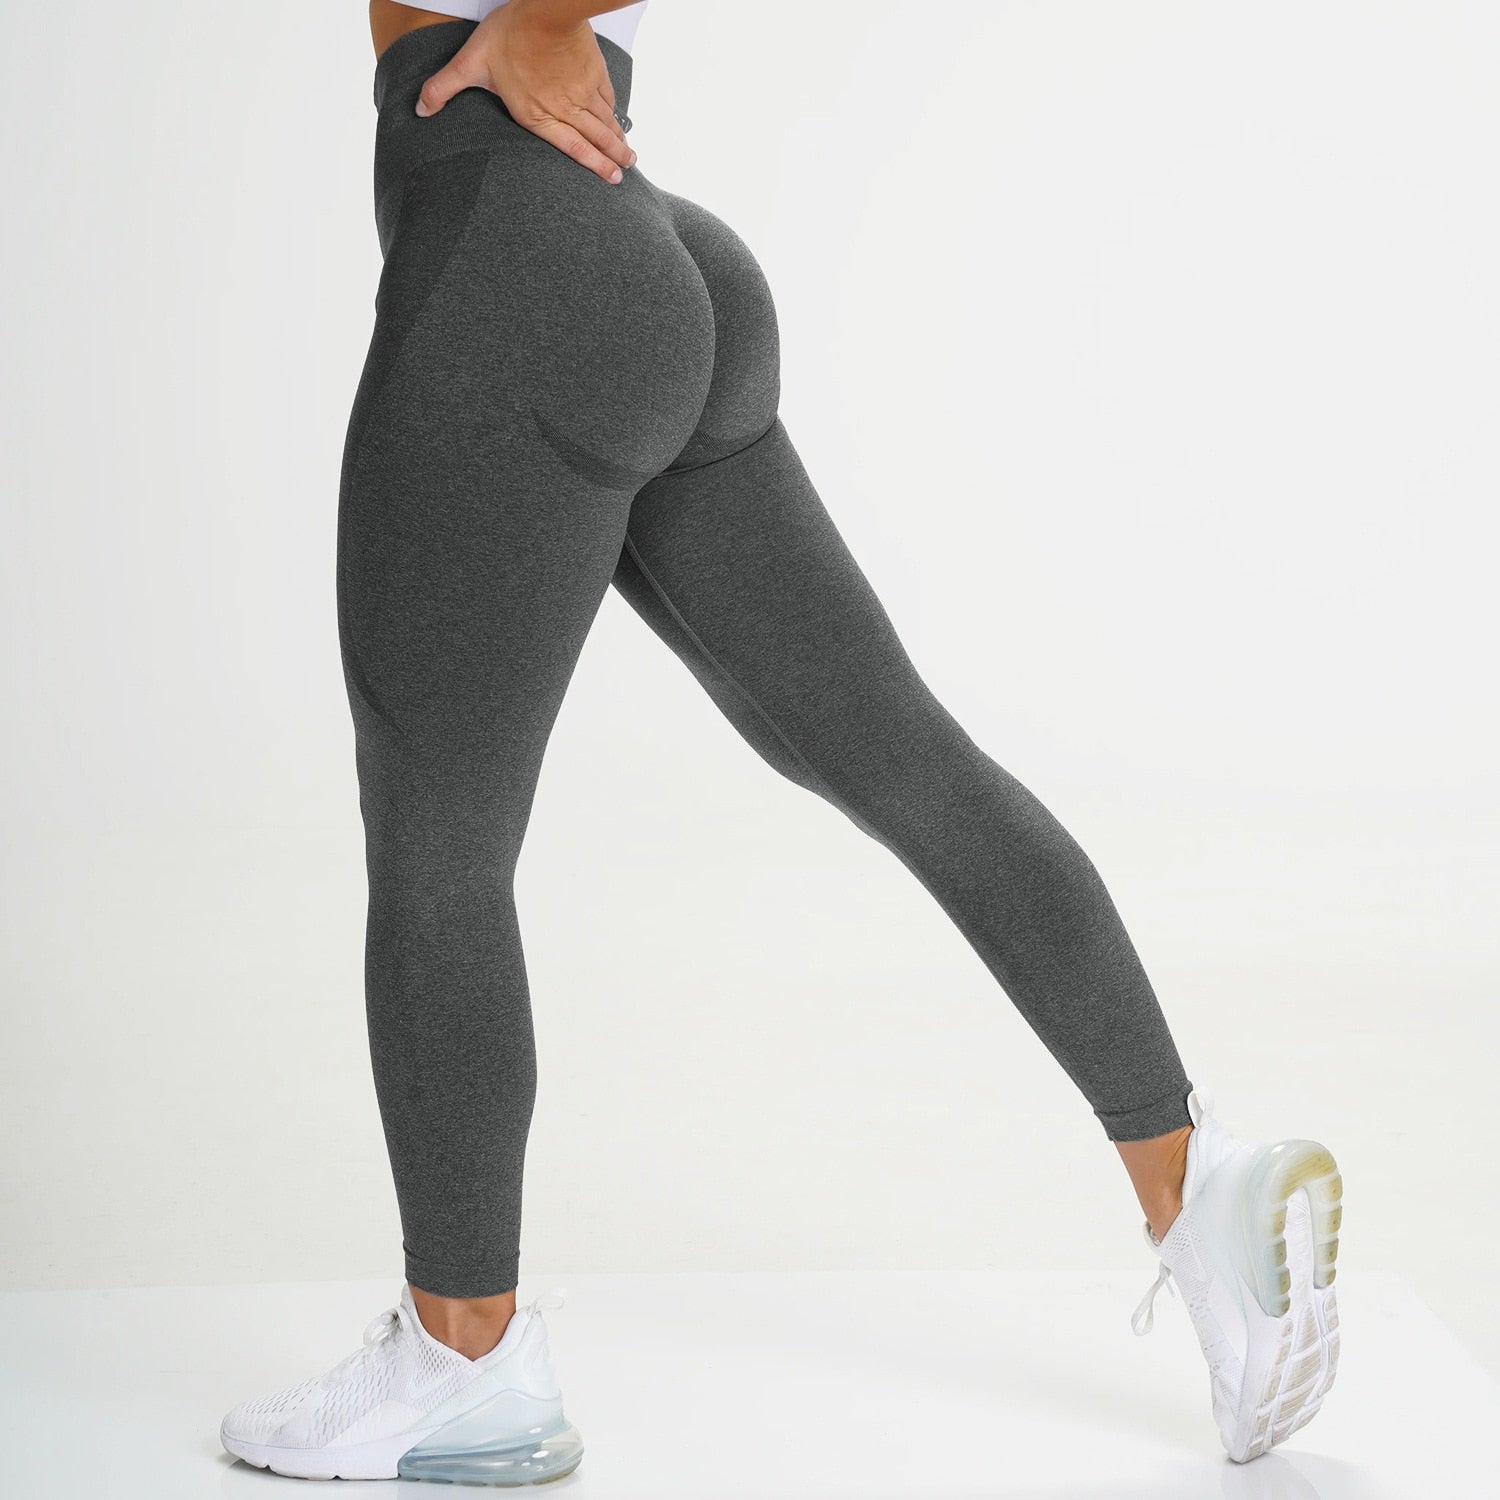 Seamless Leggings Women Sport Slim ShortsTights Fitness High Waist Women Clothing Gym Workout Pants Female Pants Dgray